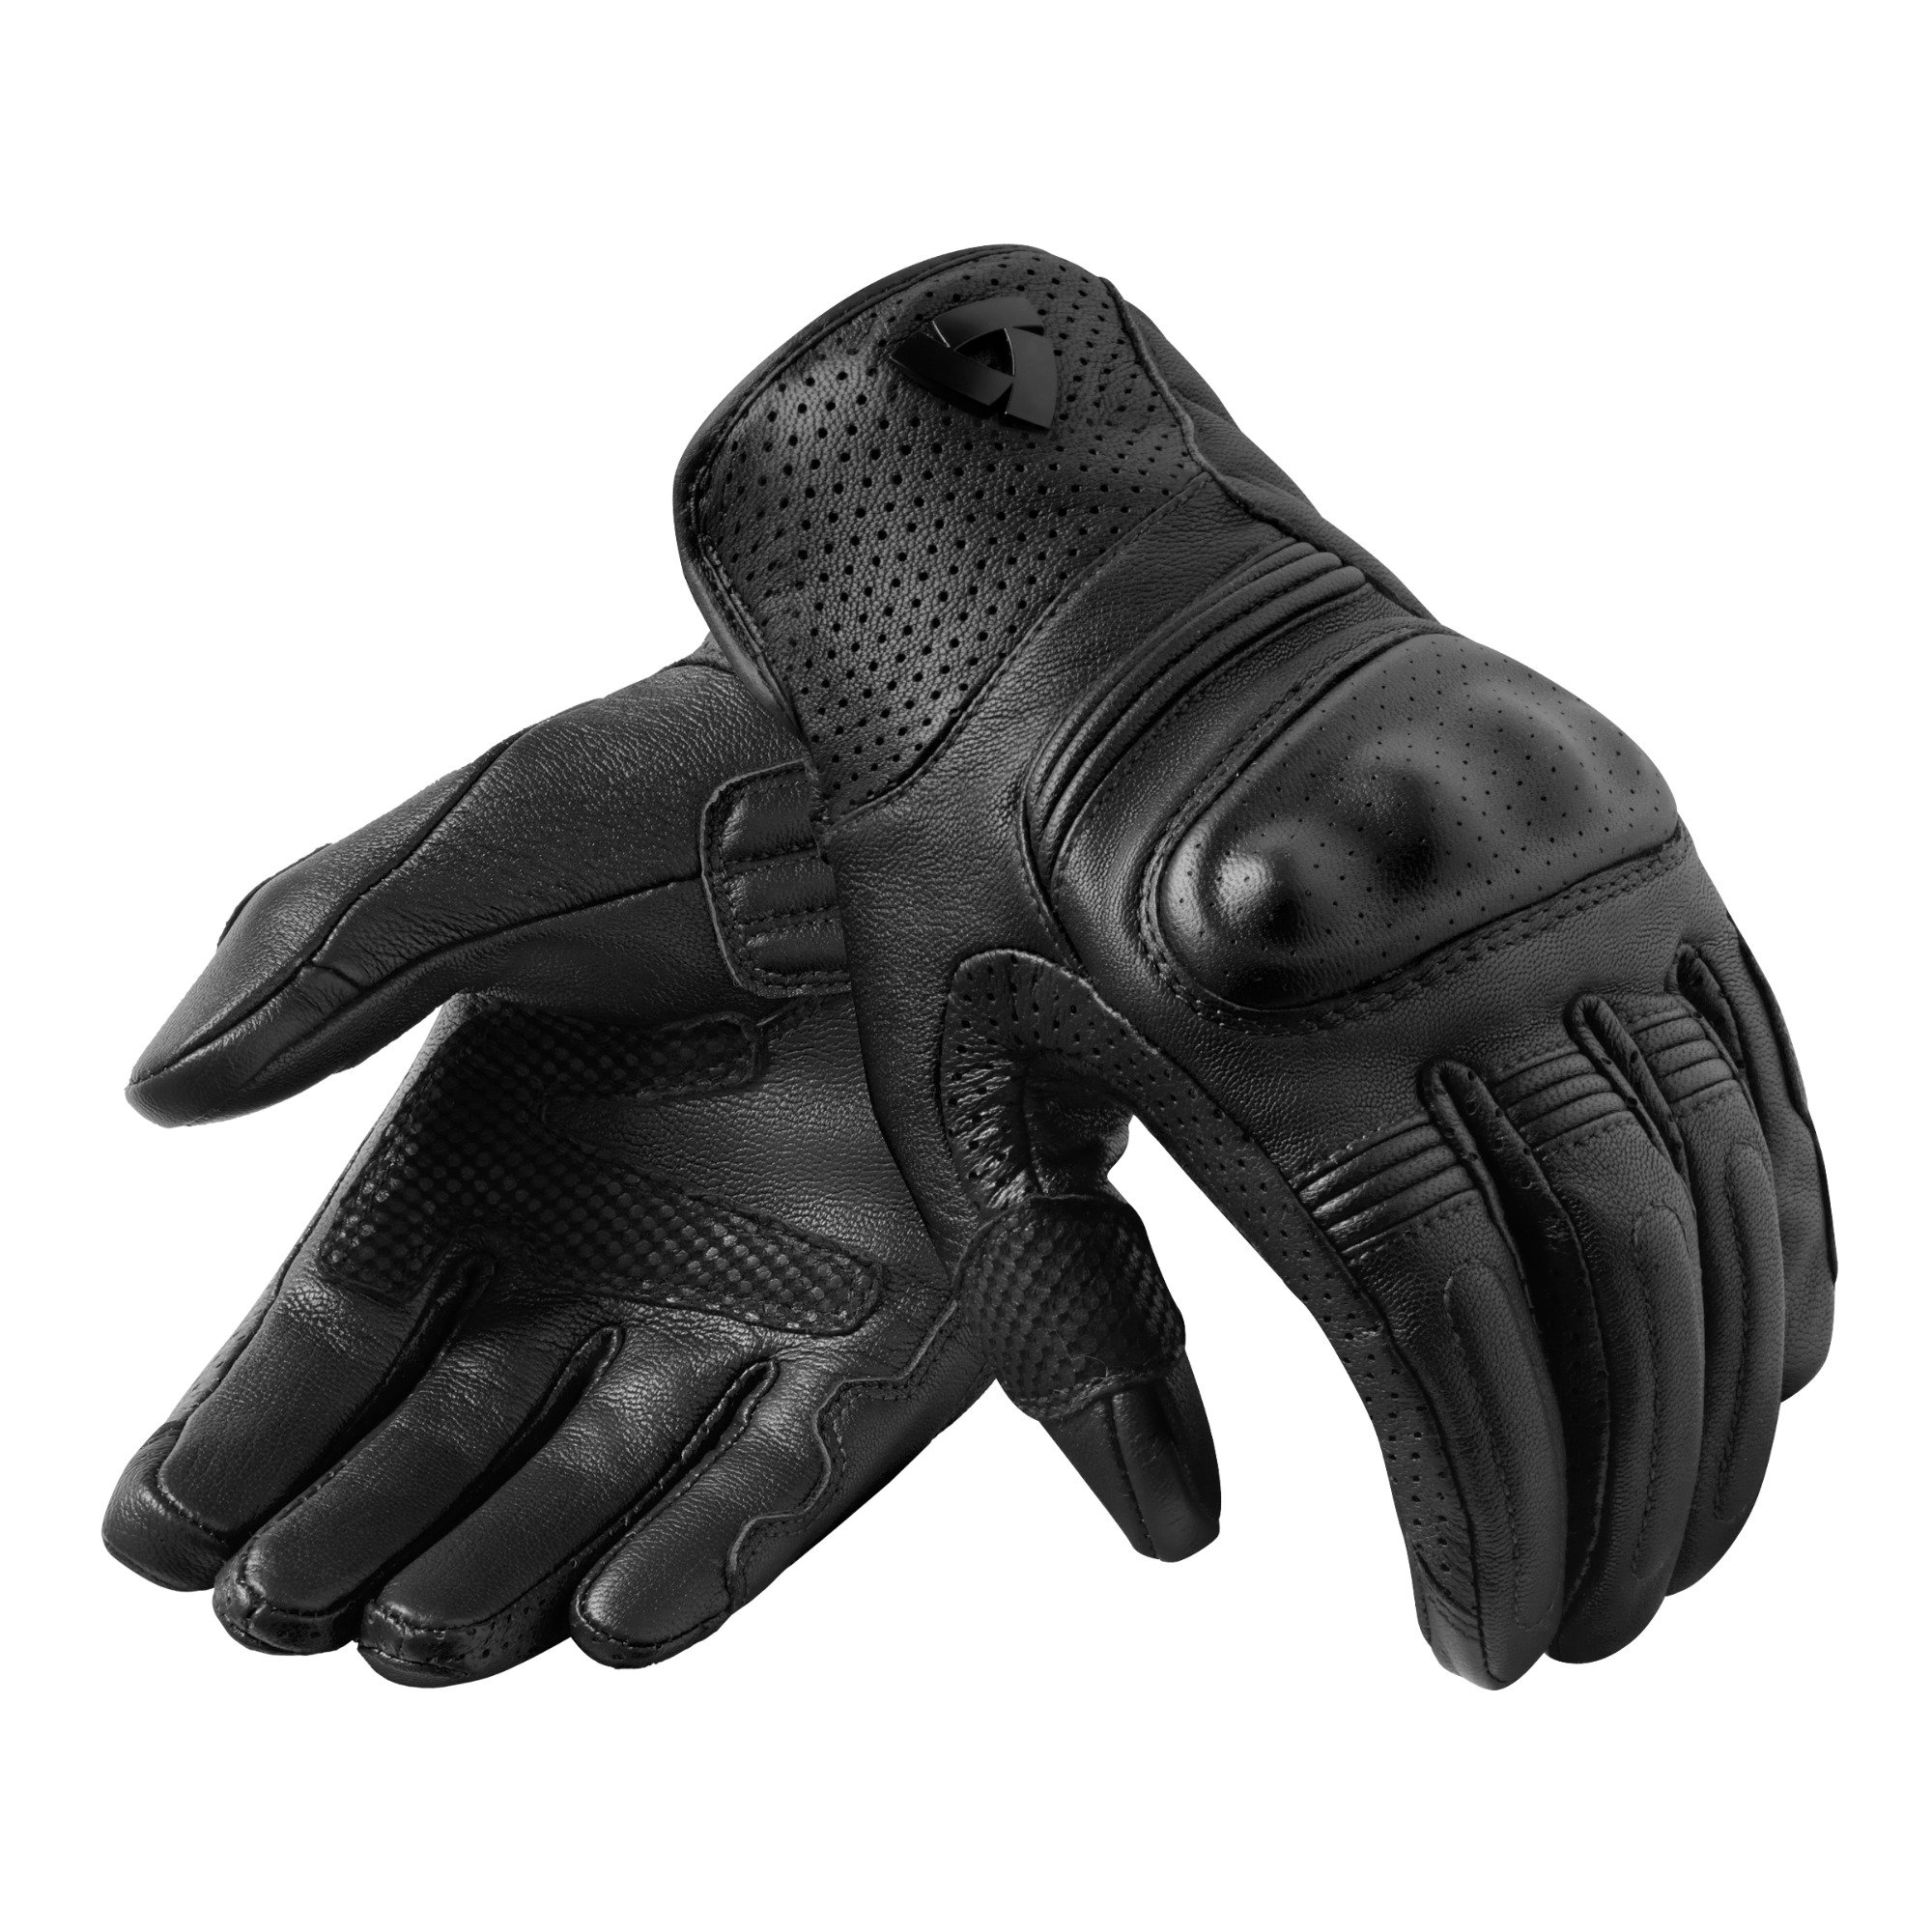 Image of REV'IT! Gloves Monster 3 Black Size M ID 8700001360128